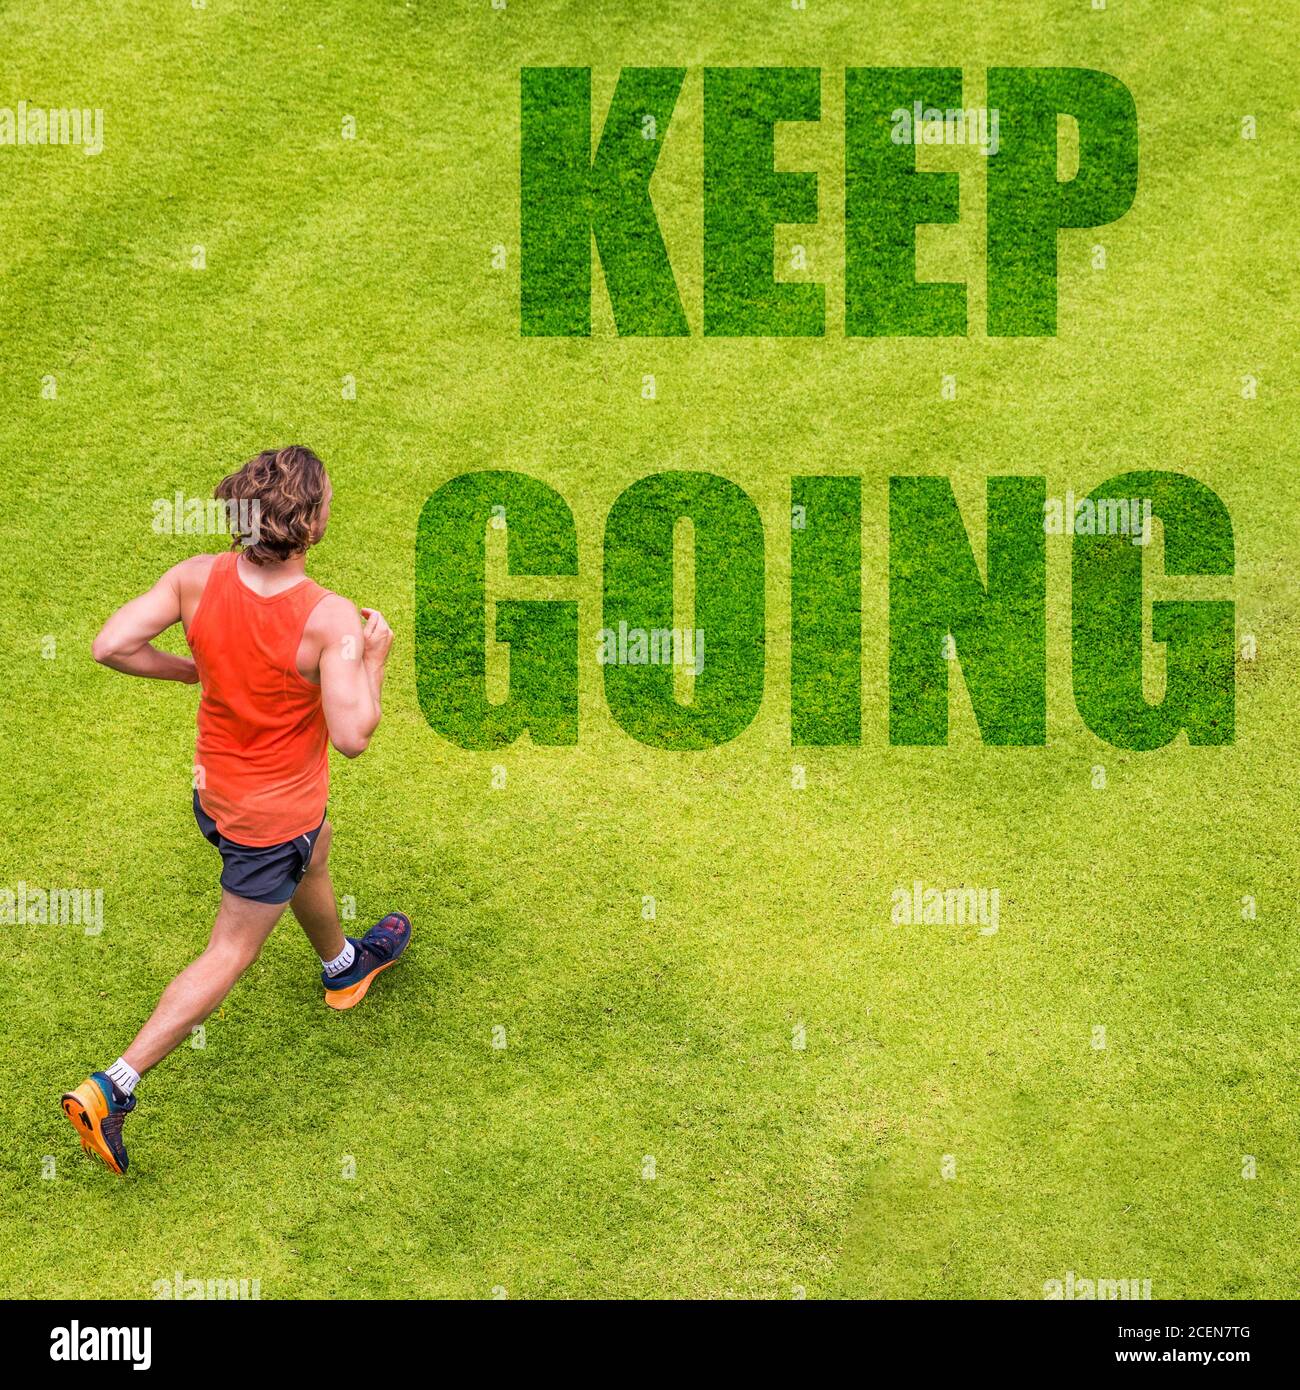 https://c8.alamy.com/comp/2CEN7TG/running-fitness-inspiration-motivation-message-written-on-grass-texture-man-runner-with-text-keep-going-on-background-for-motivational-quote-2CEN7TG.jpg